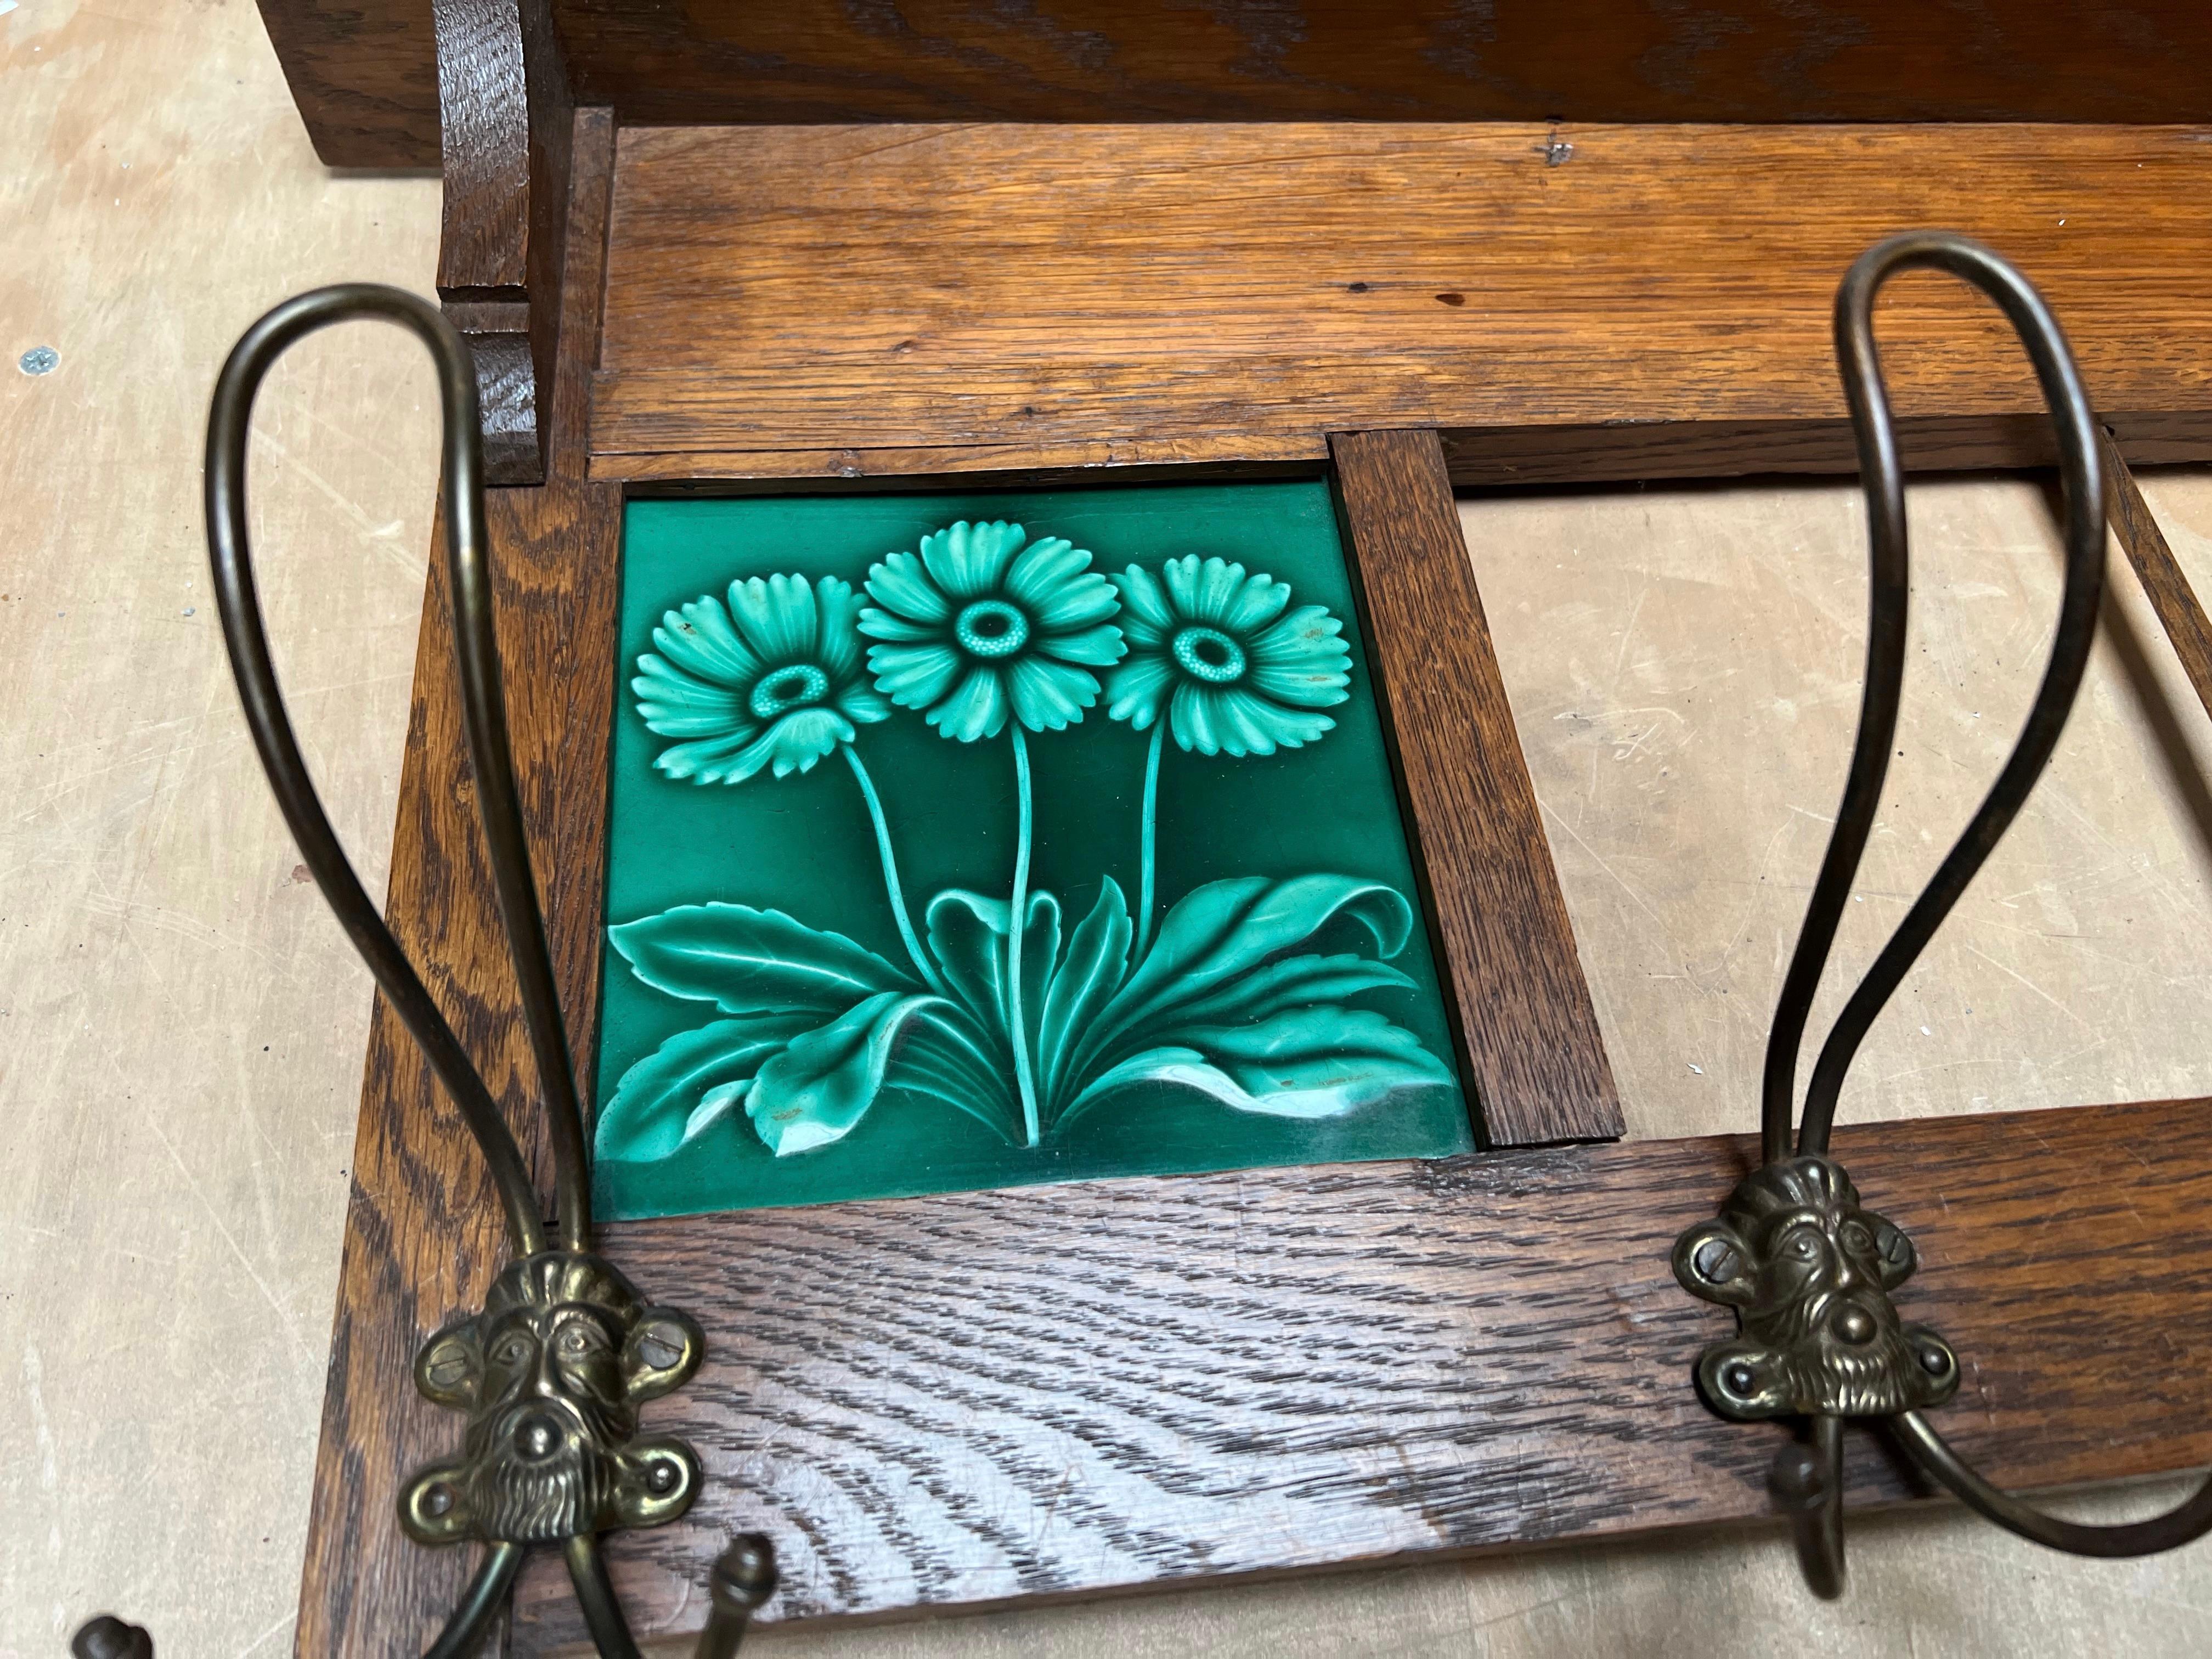 European Antique Arts & Crafts Coat Rack with Majolica Glazed, Stylized Flower Tiles